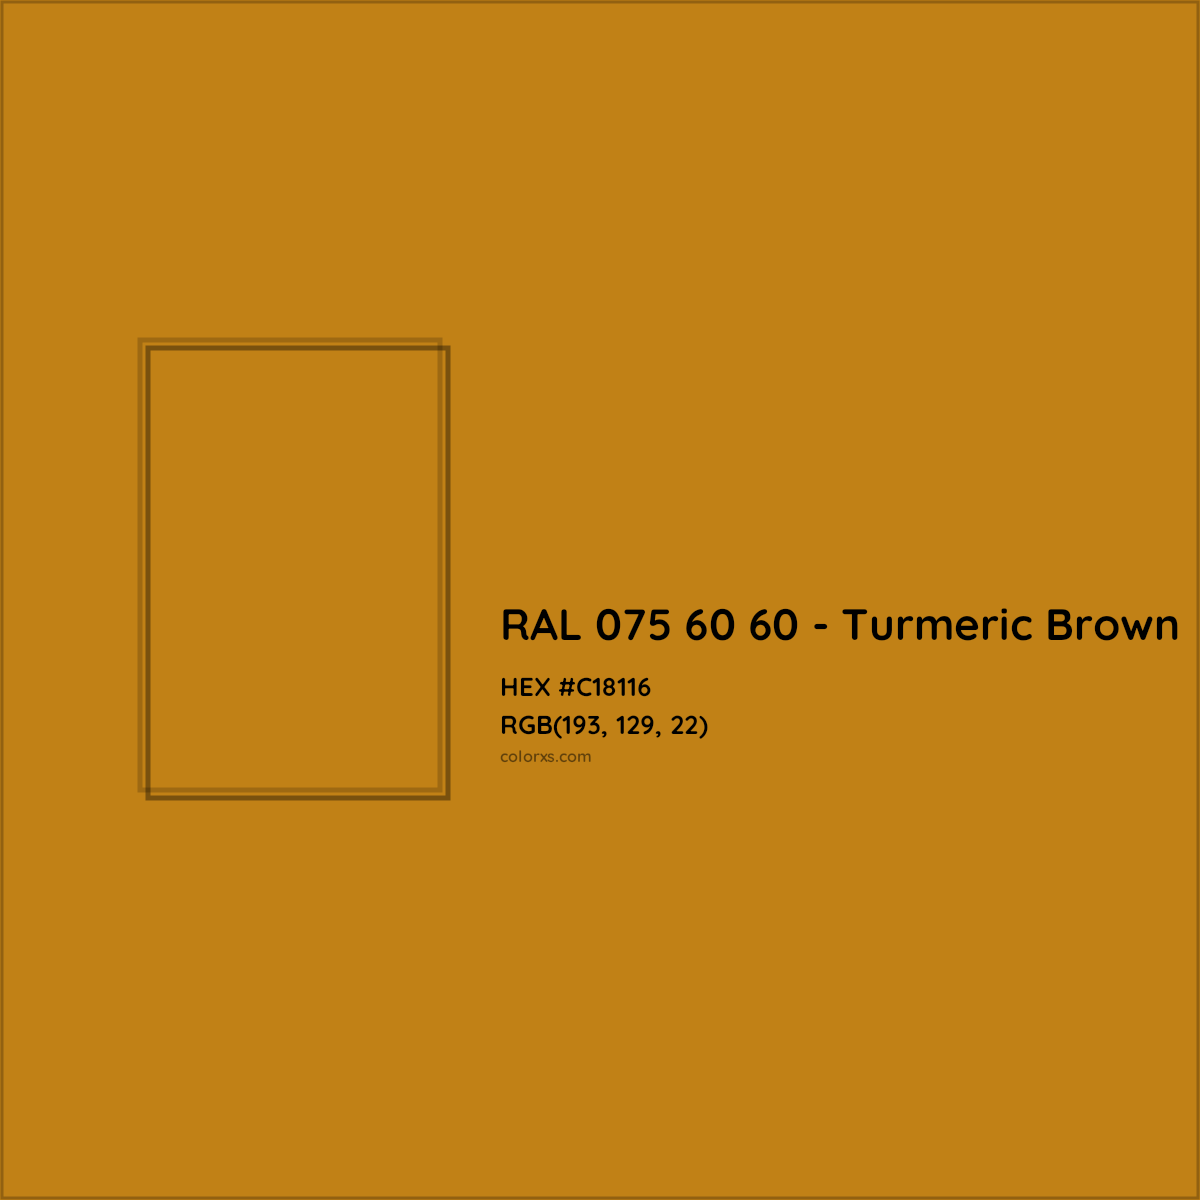 HEX #C18116 RAL 075 60 60 - Turmeric Brown CMS RAL Design - Color Code